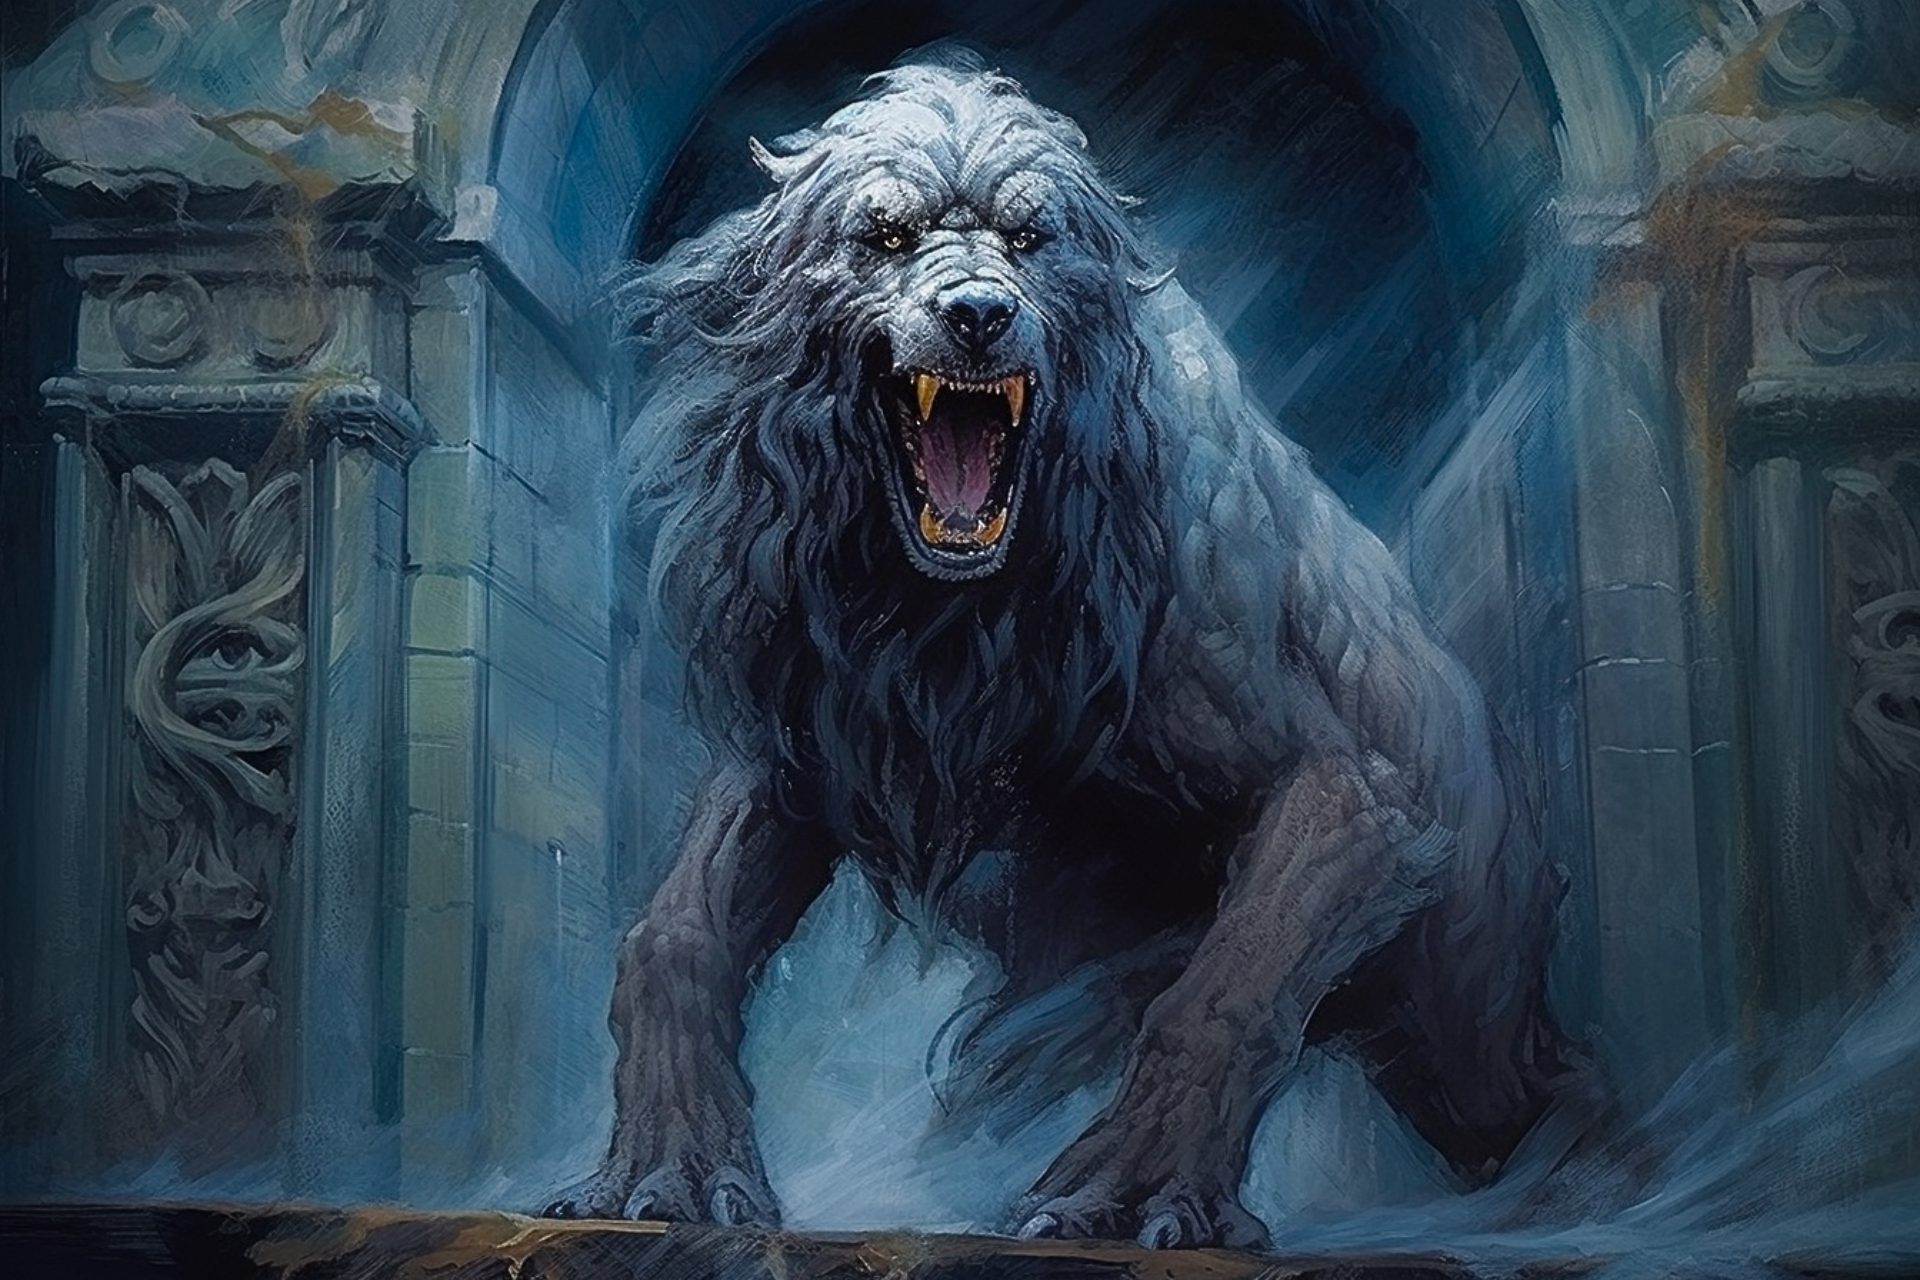 An illustration of a giant hound guarding a dark gateway.